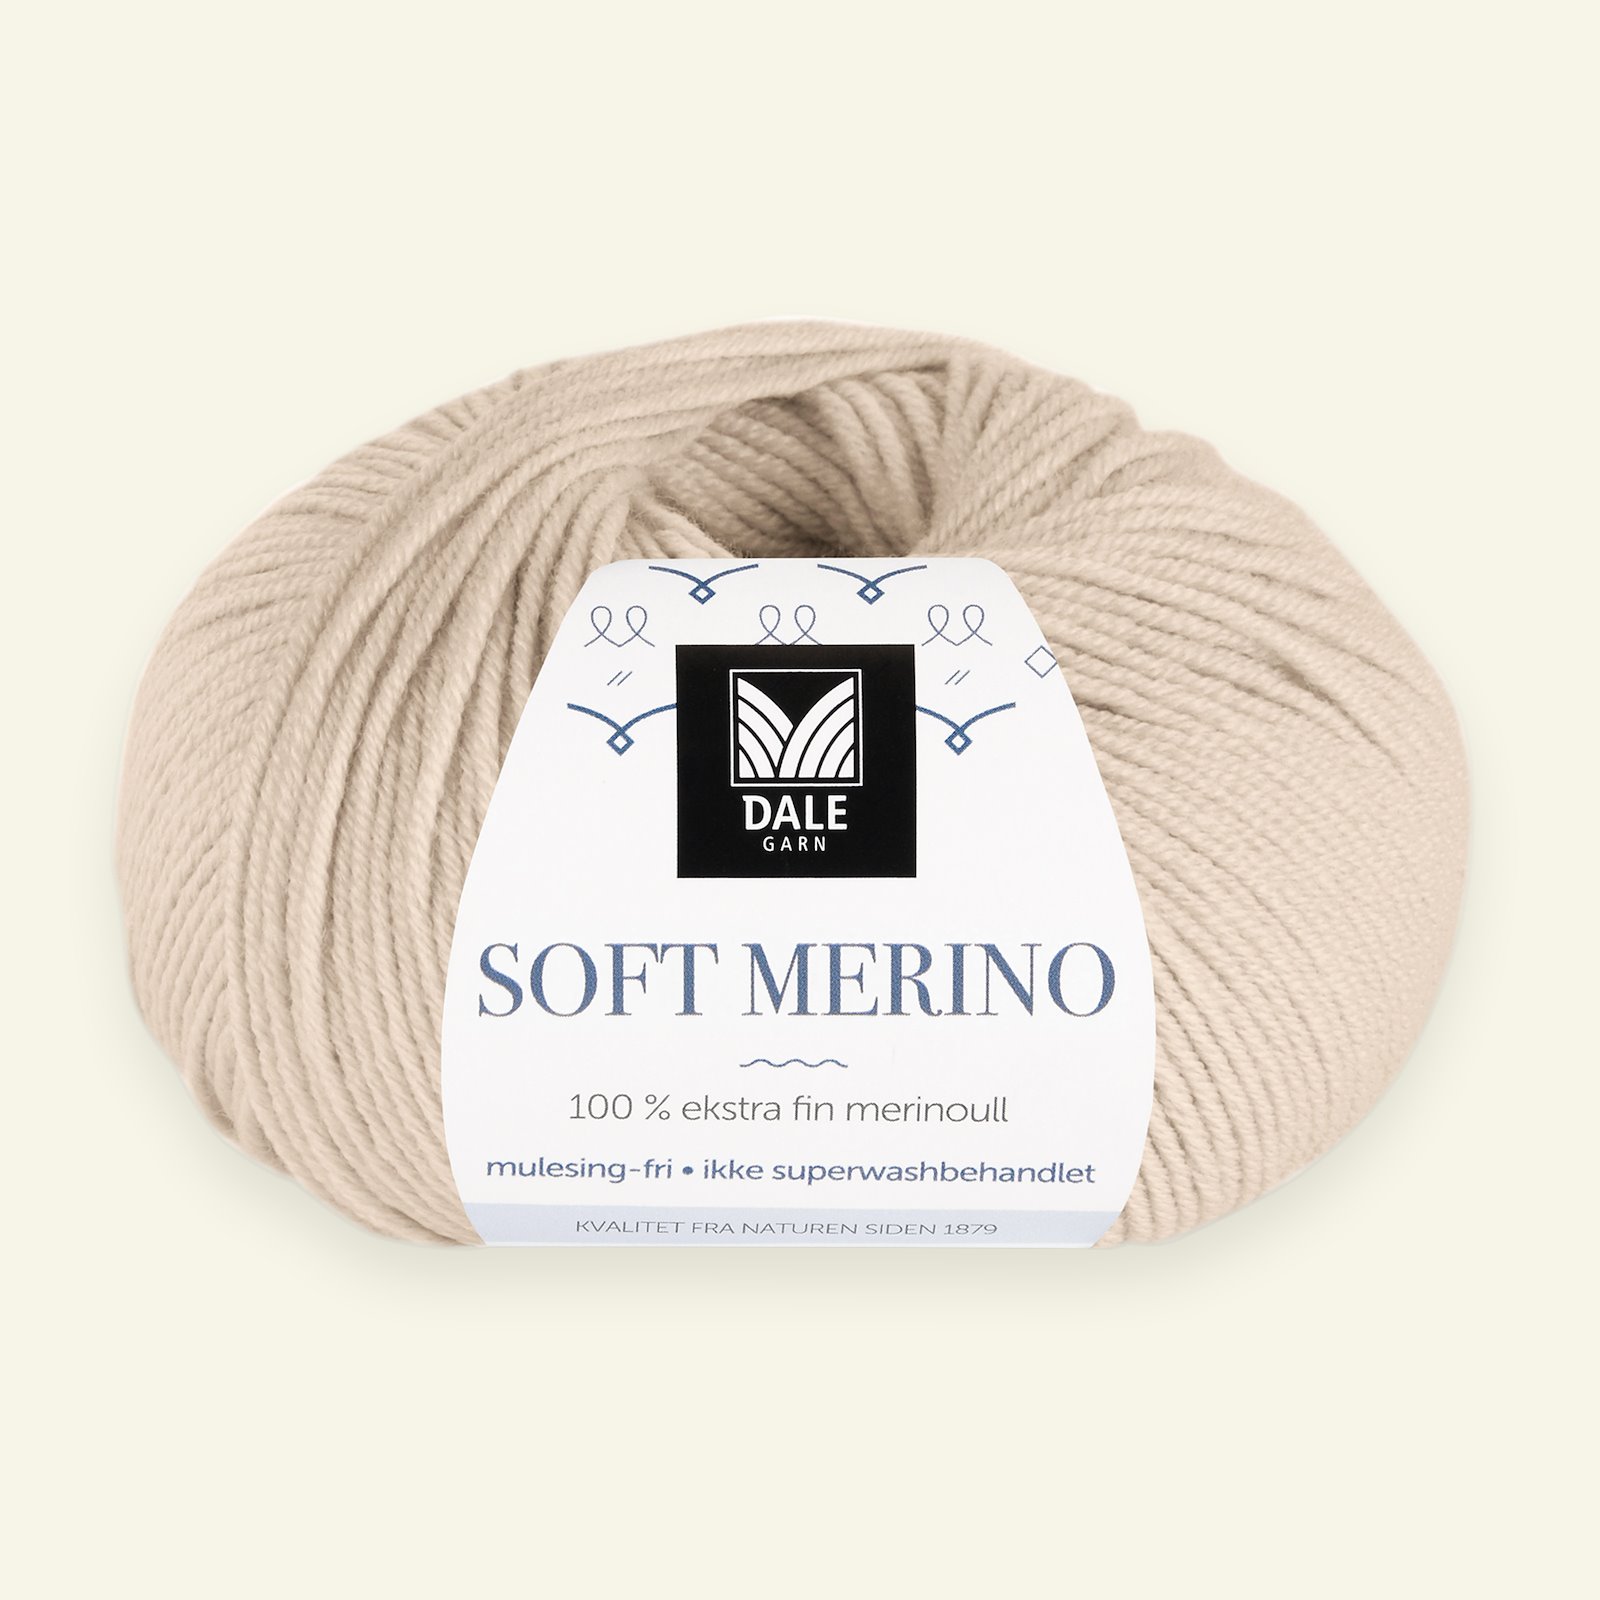 Dale Garn, 100% ekstra fint merinogarn "Soft Merino", Latte (3037) 90000358_pack